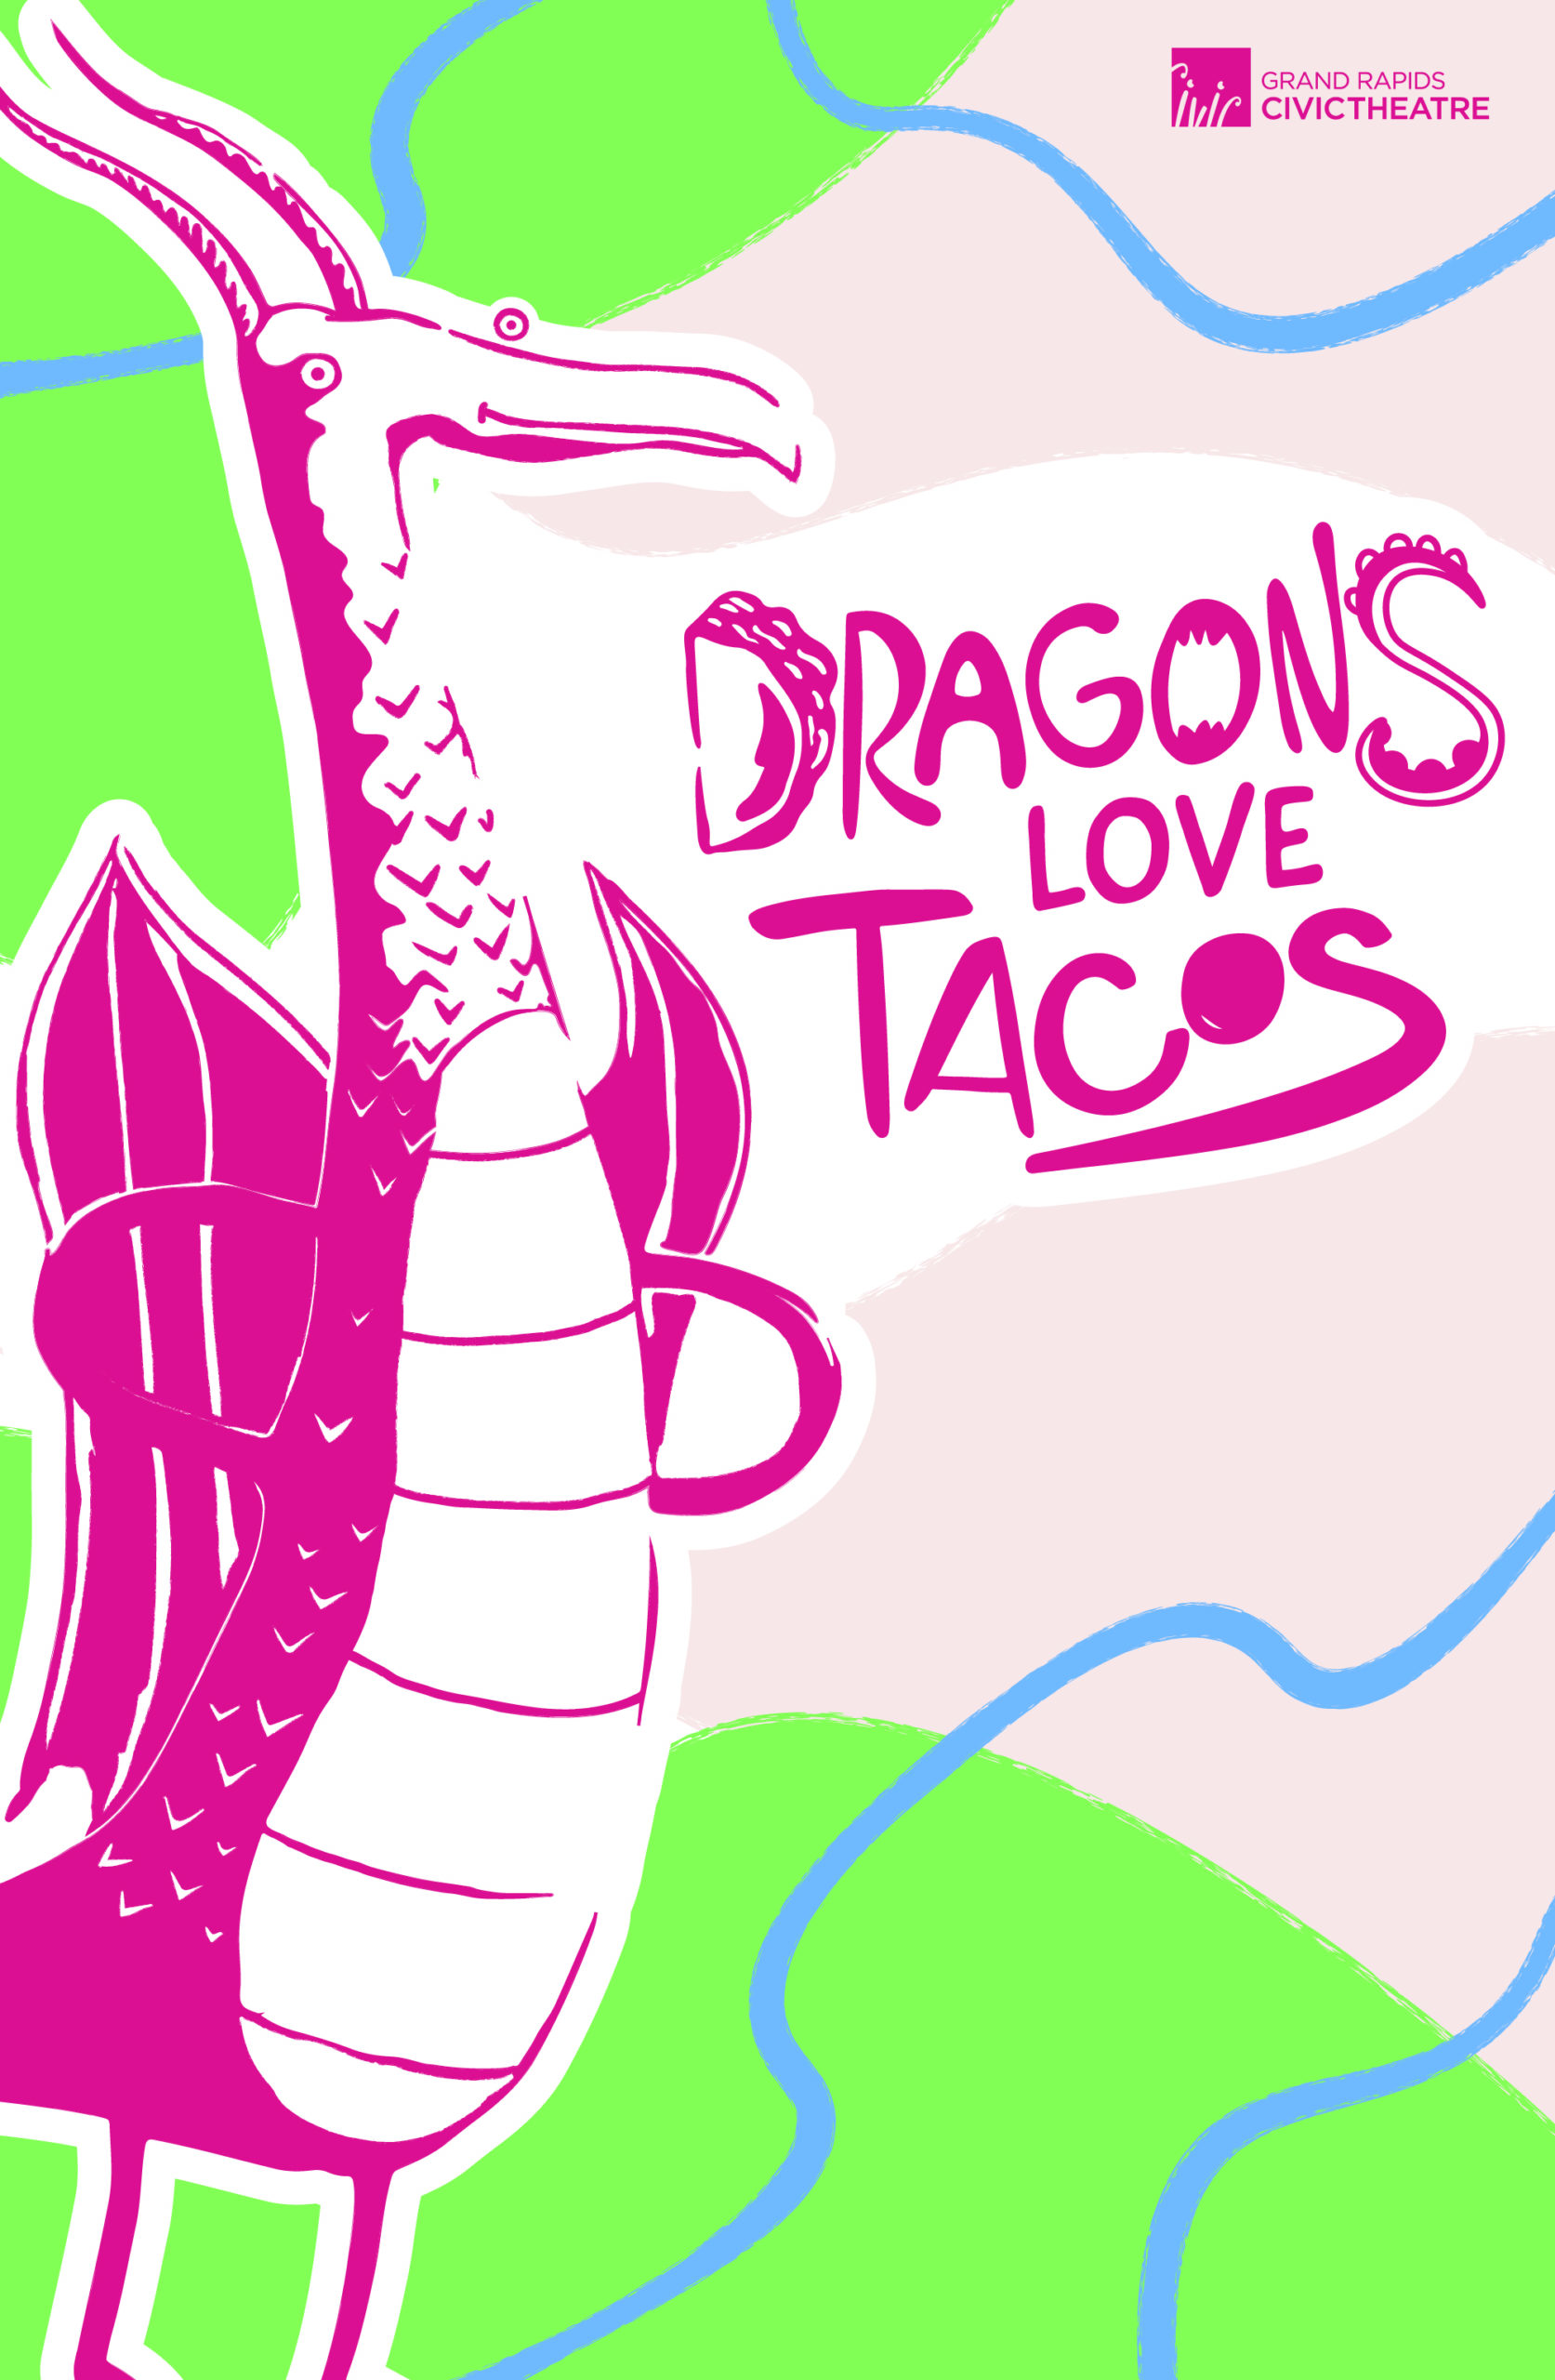 Dragons Love Tacos Grand Rapids Civic Theatre